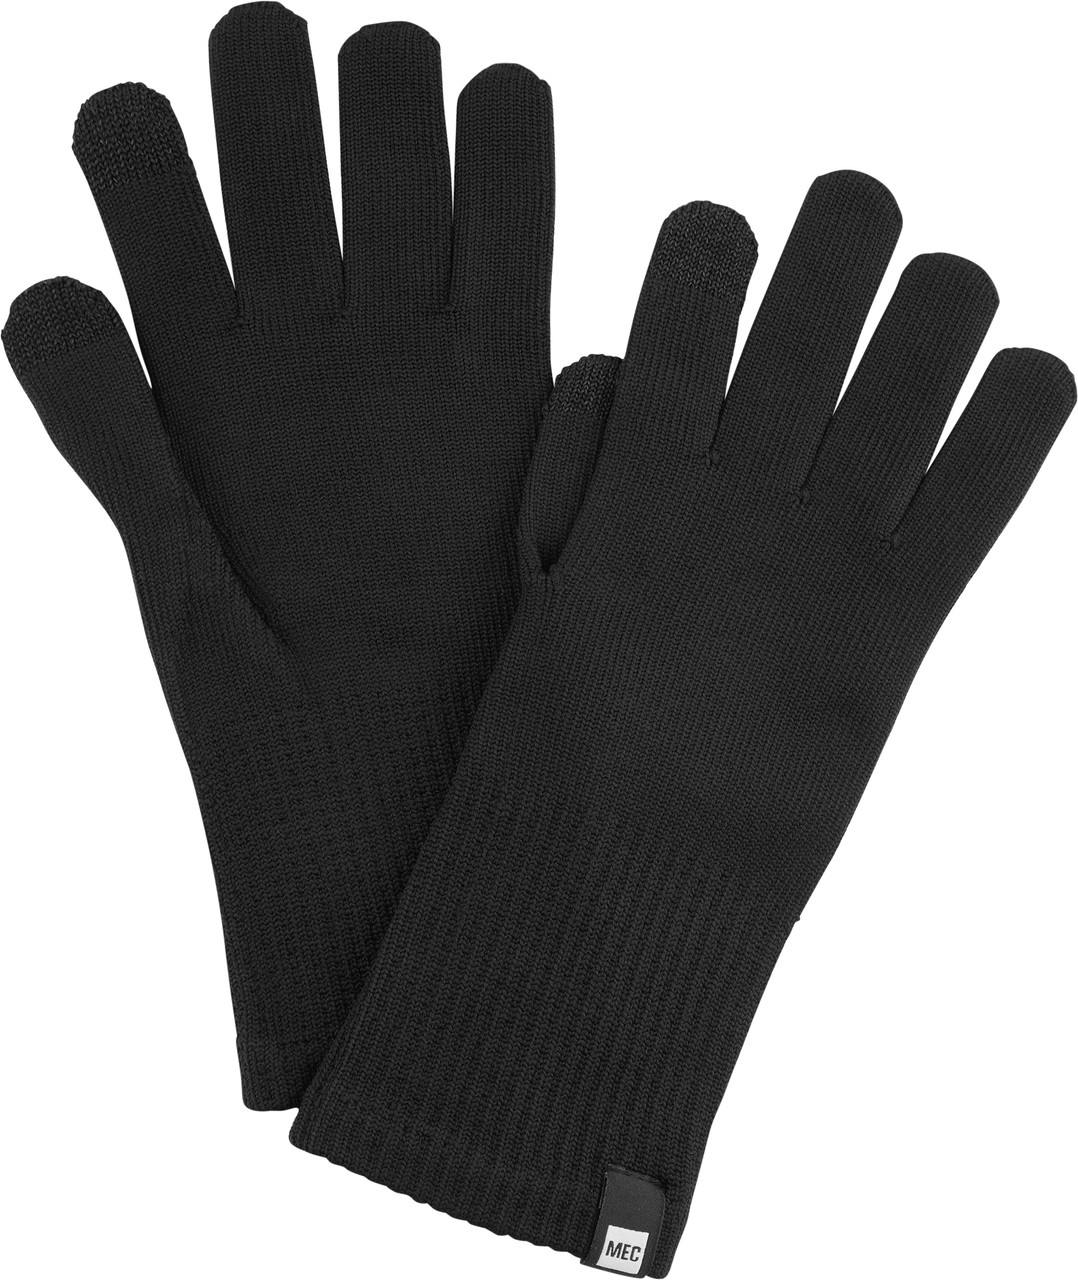 Sous-gants en polypropylène Noir